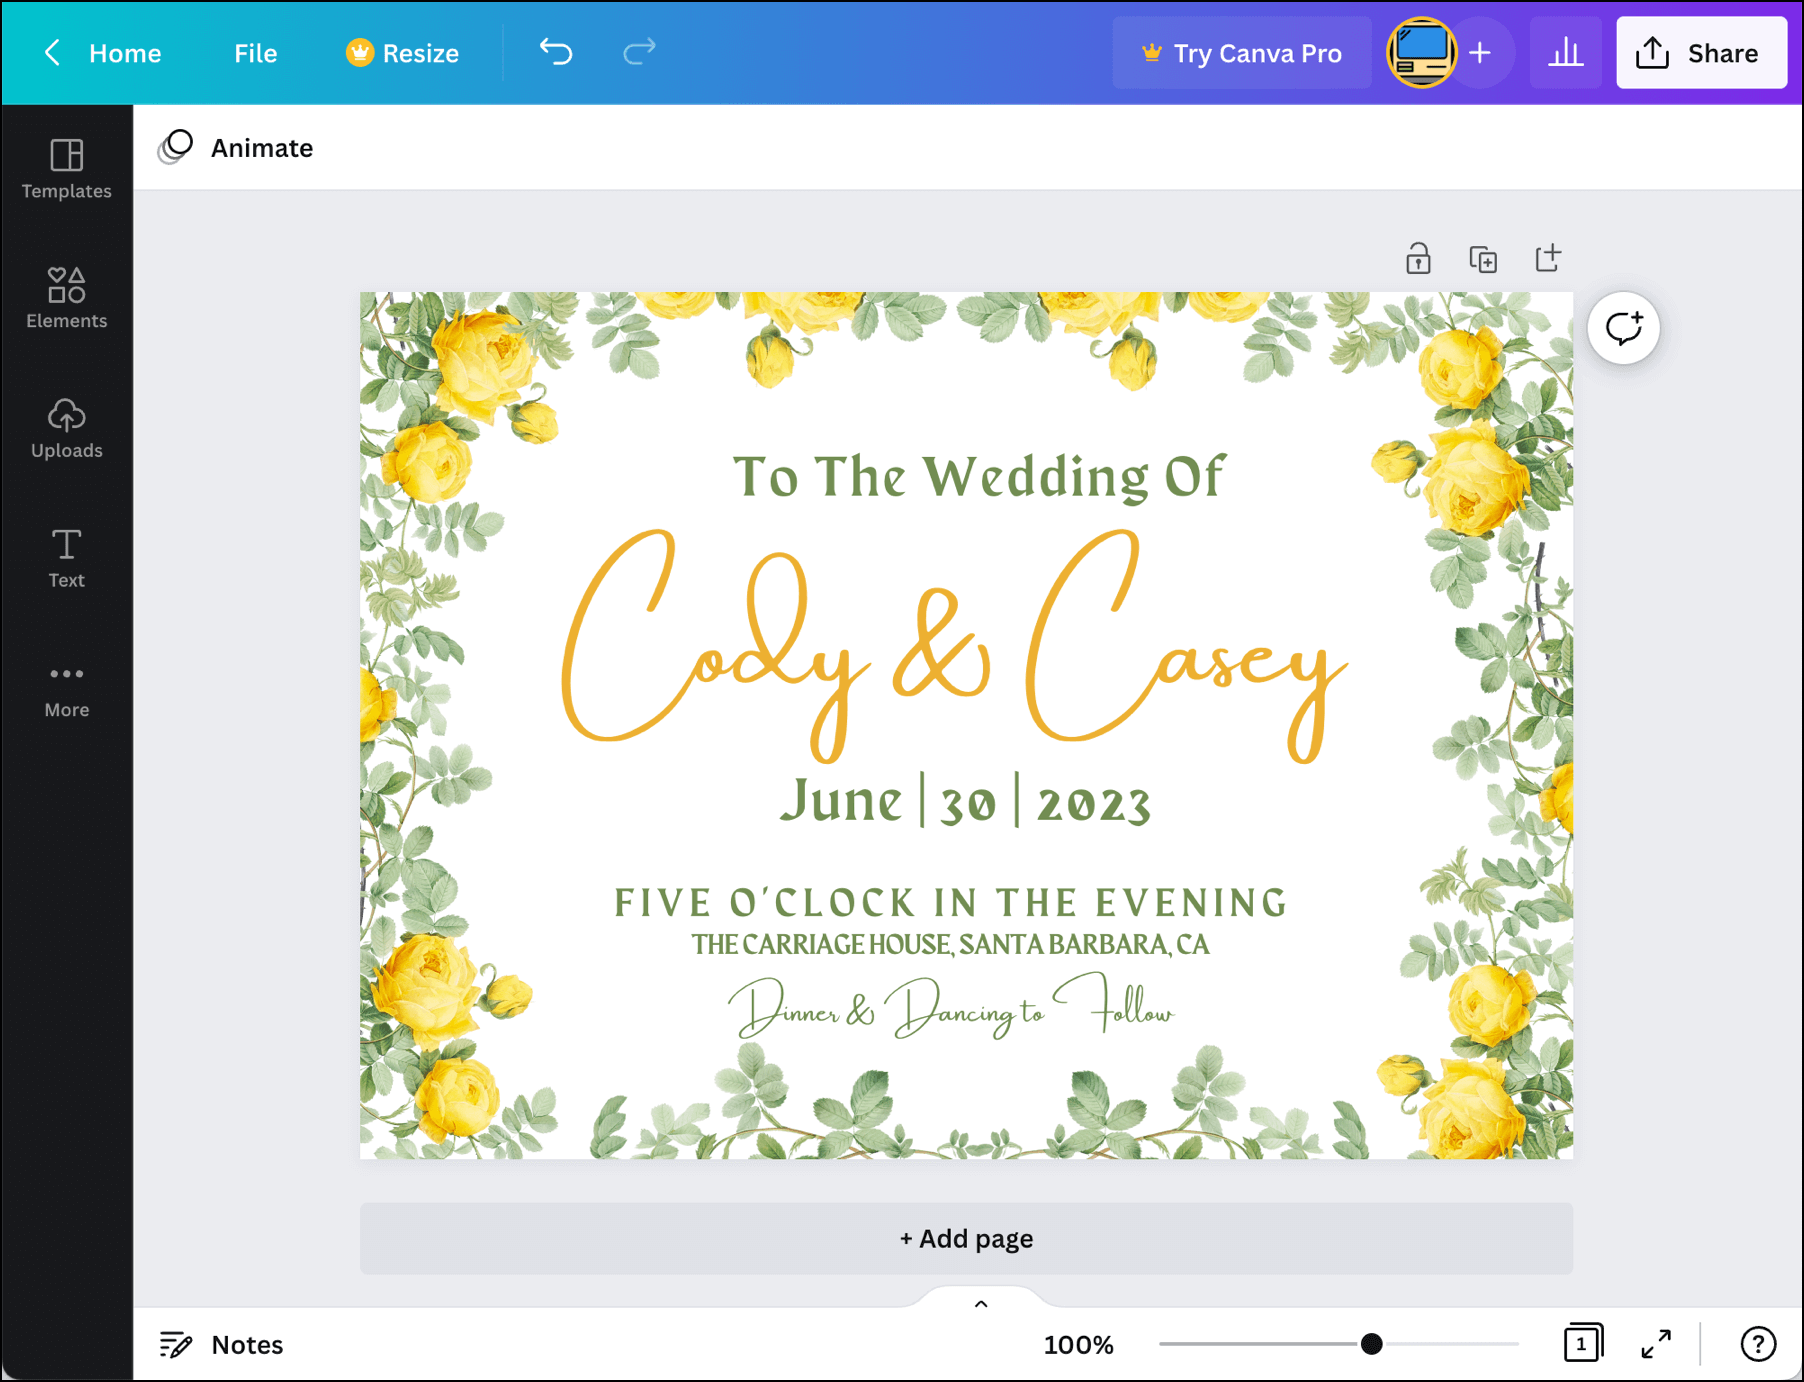 Customize your wedding invite